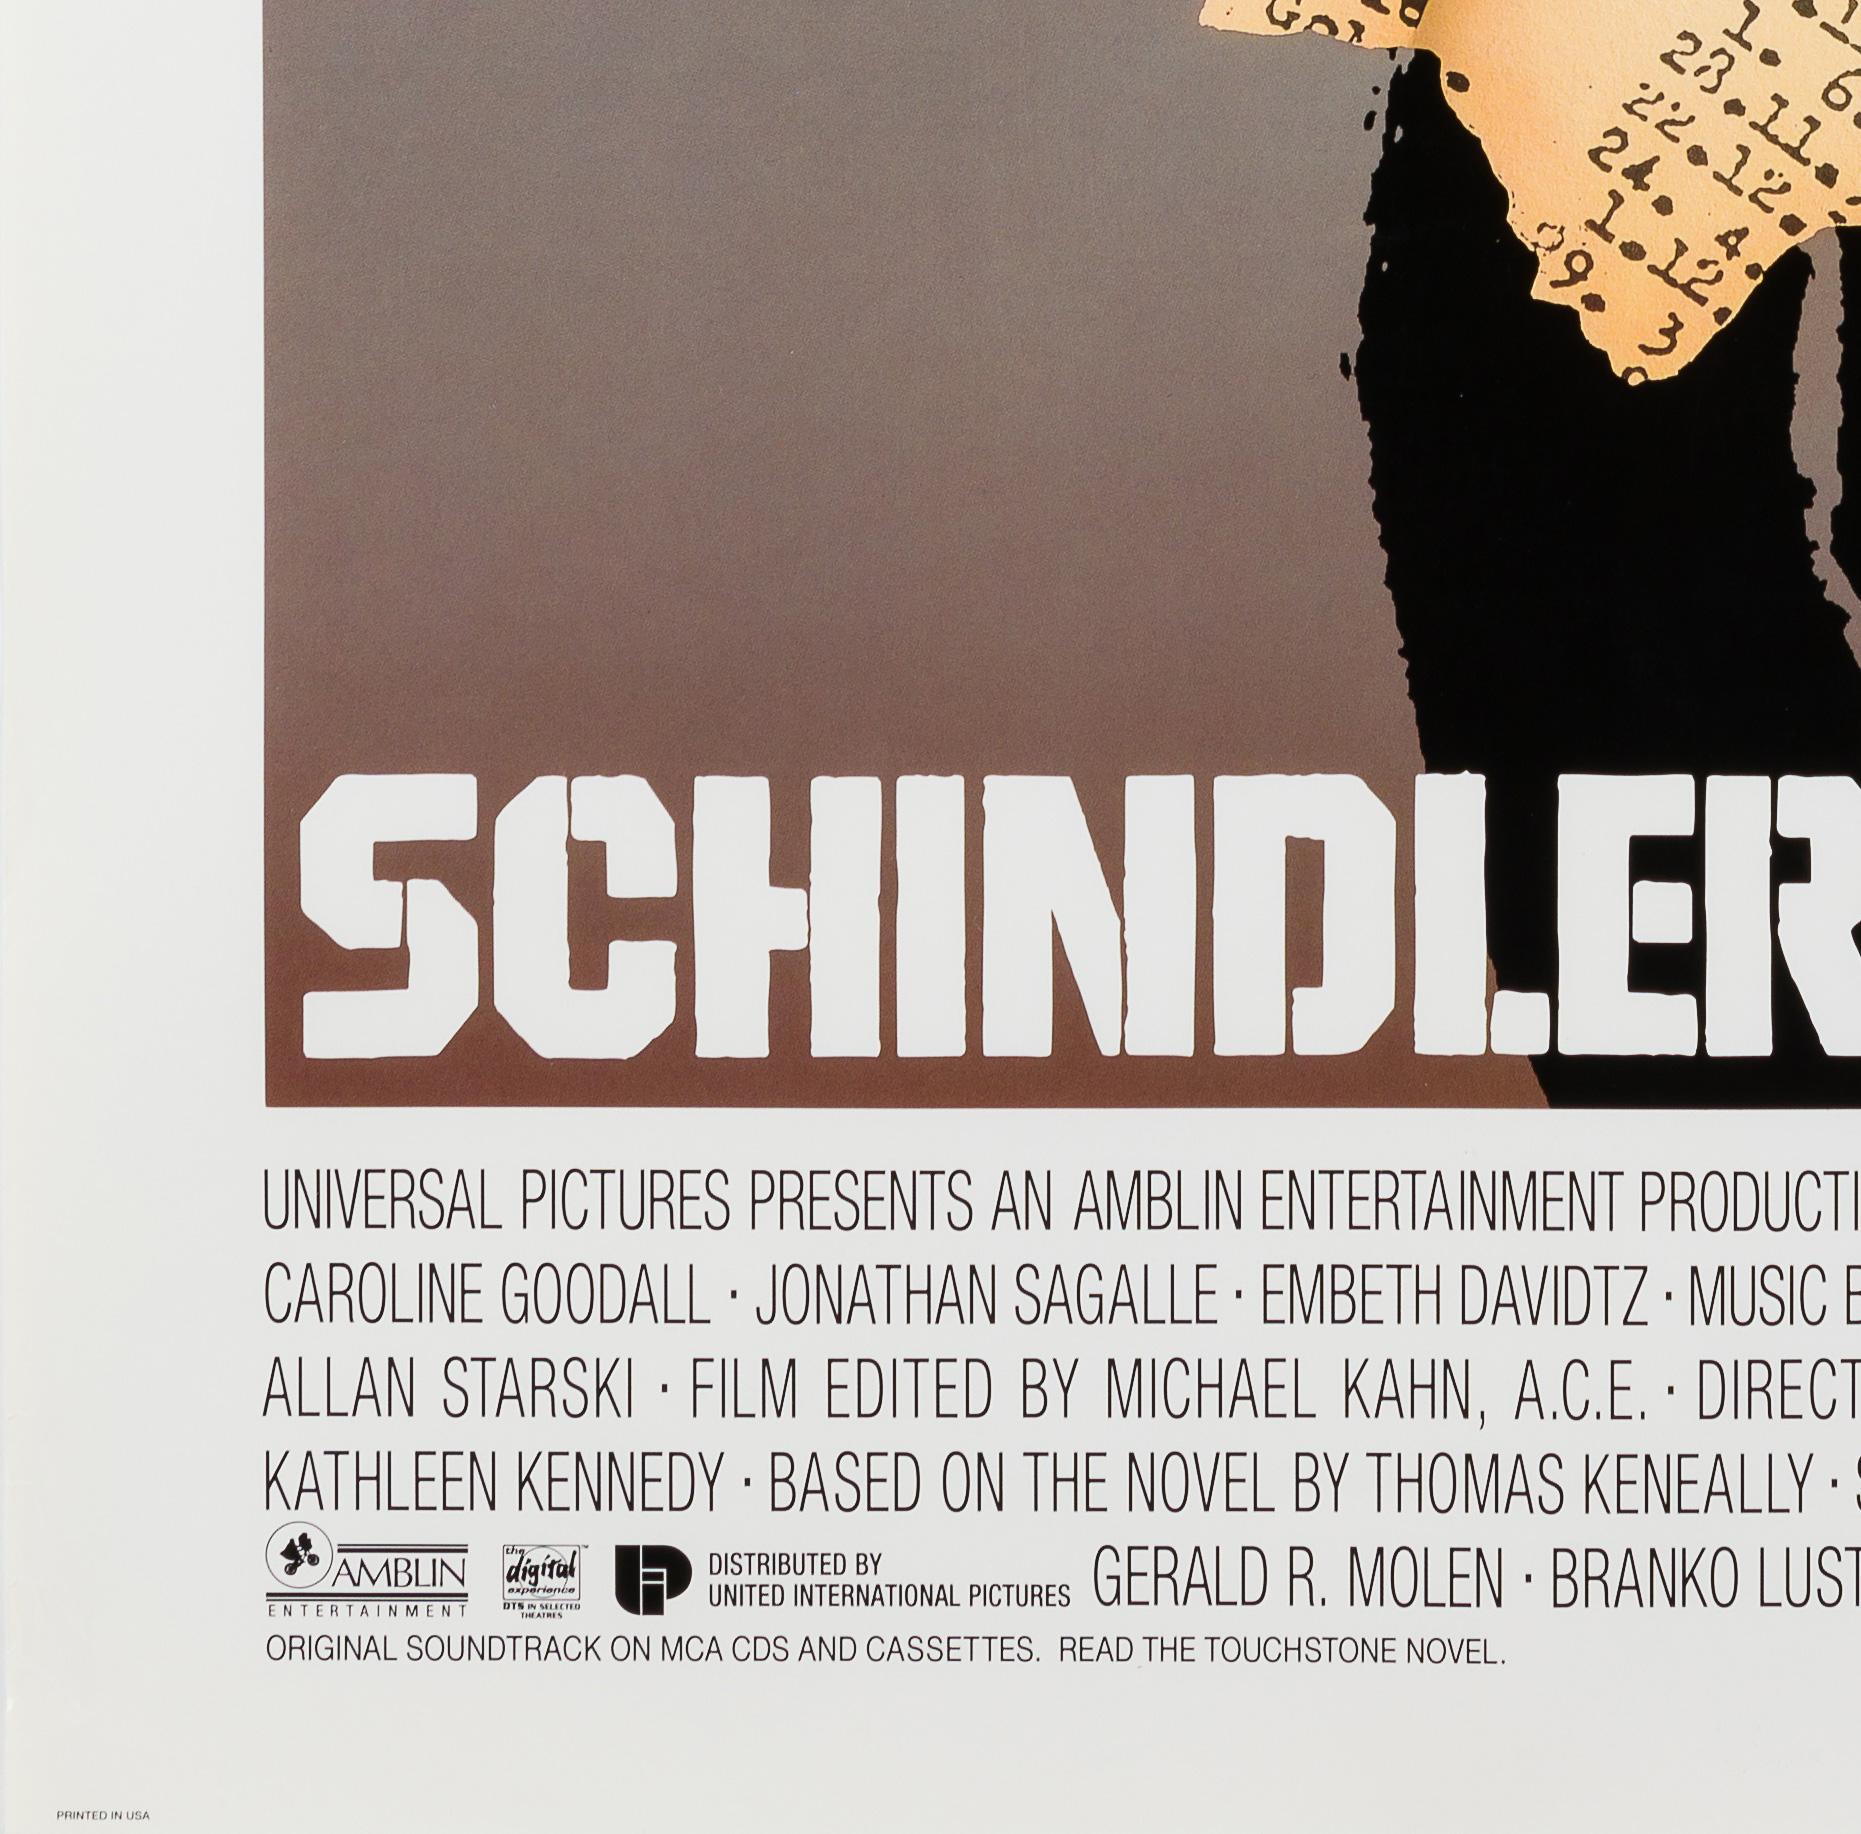 Paper Schindler's List Original Special US Film Poster, Saul Bass, 1993 For Sale